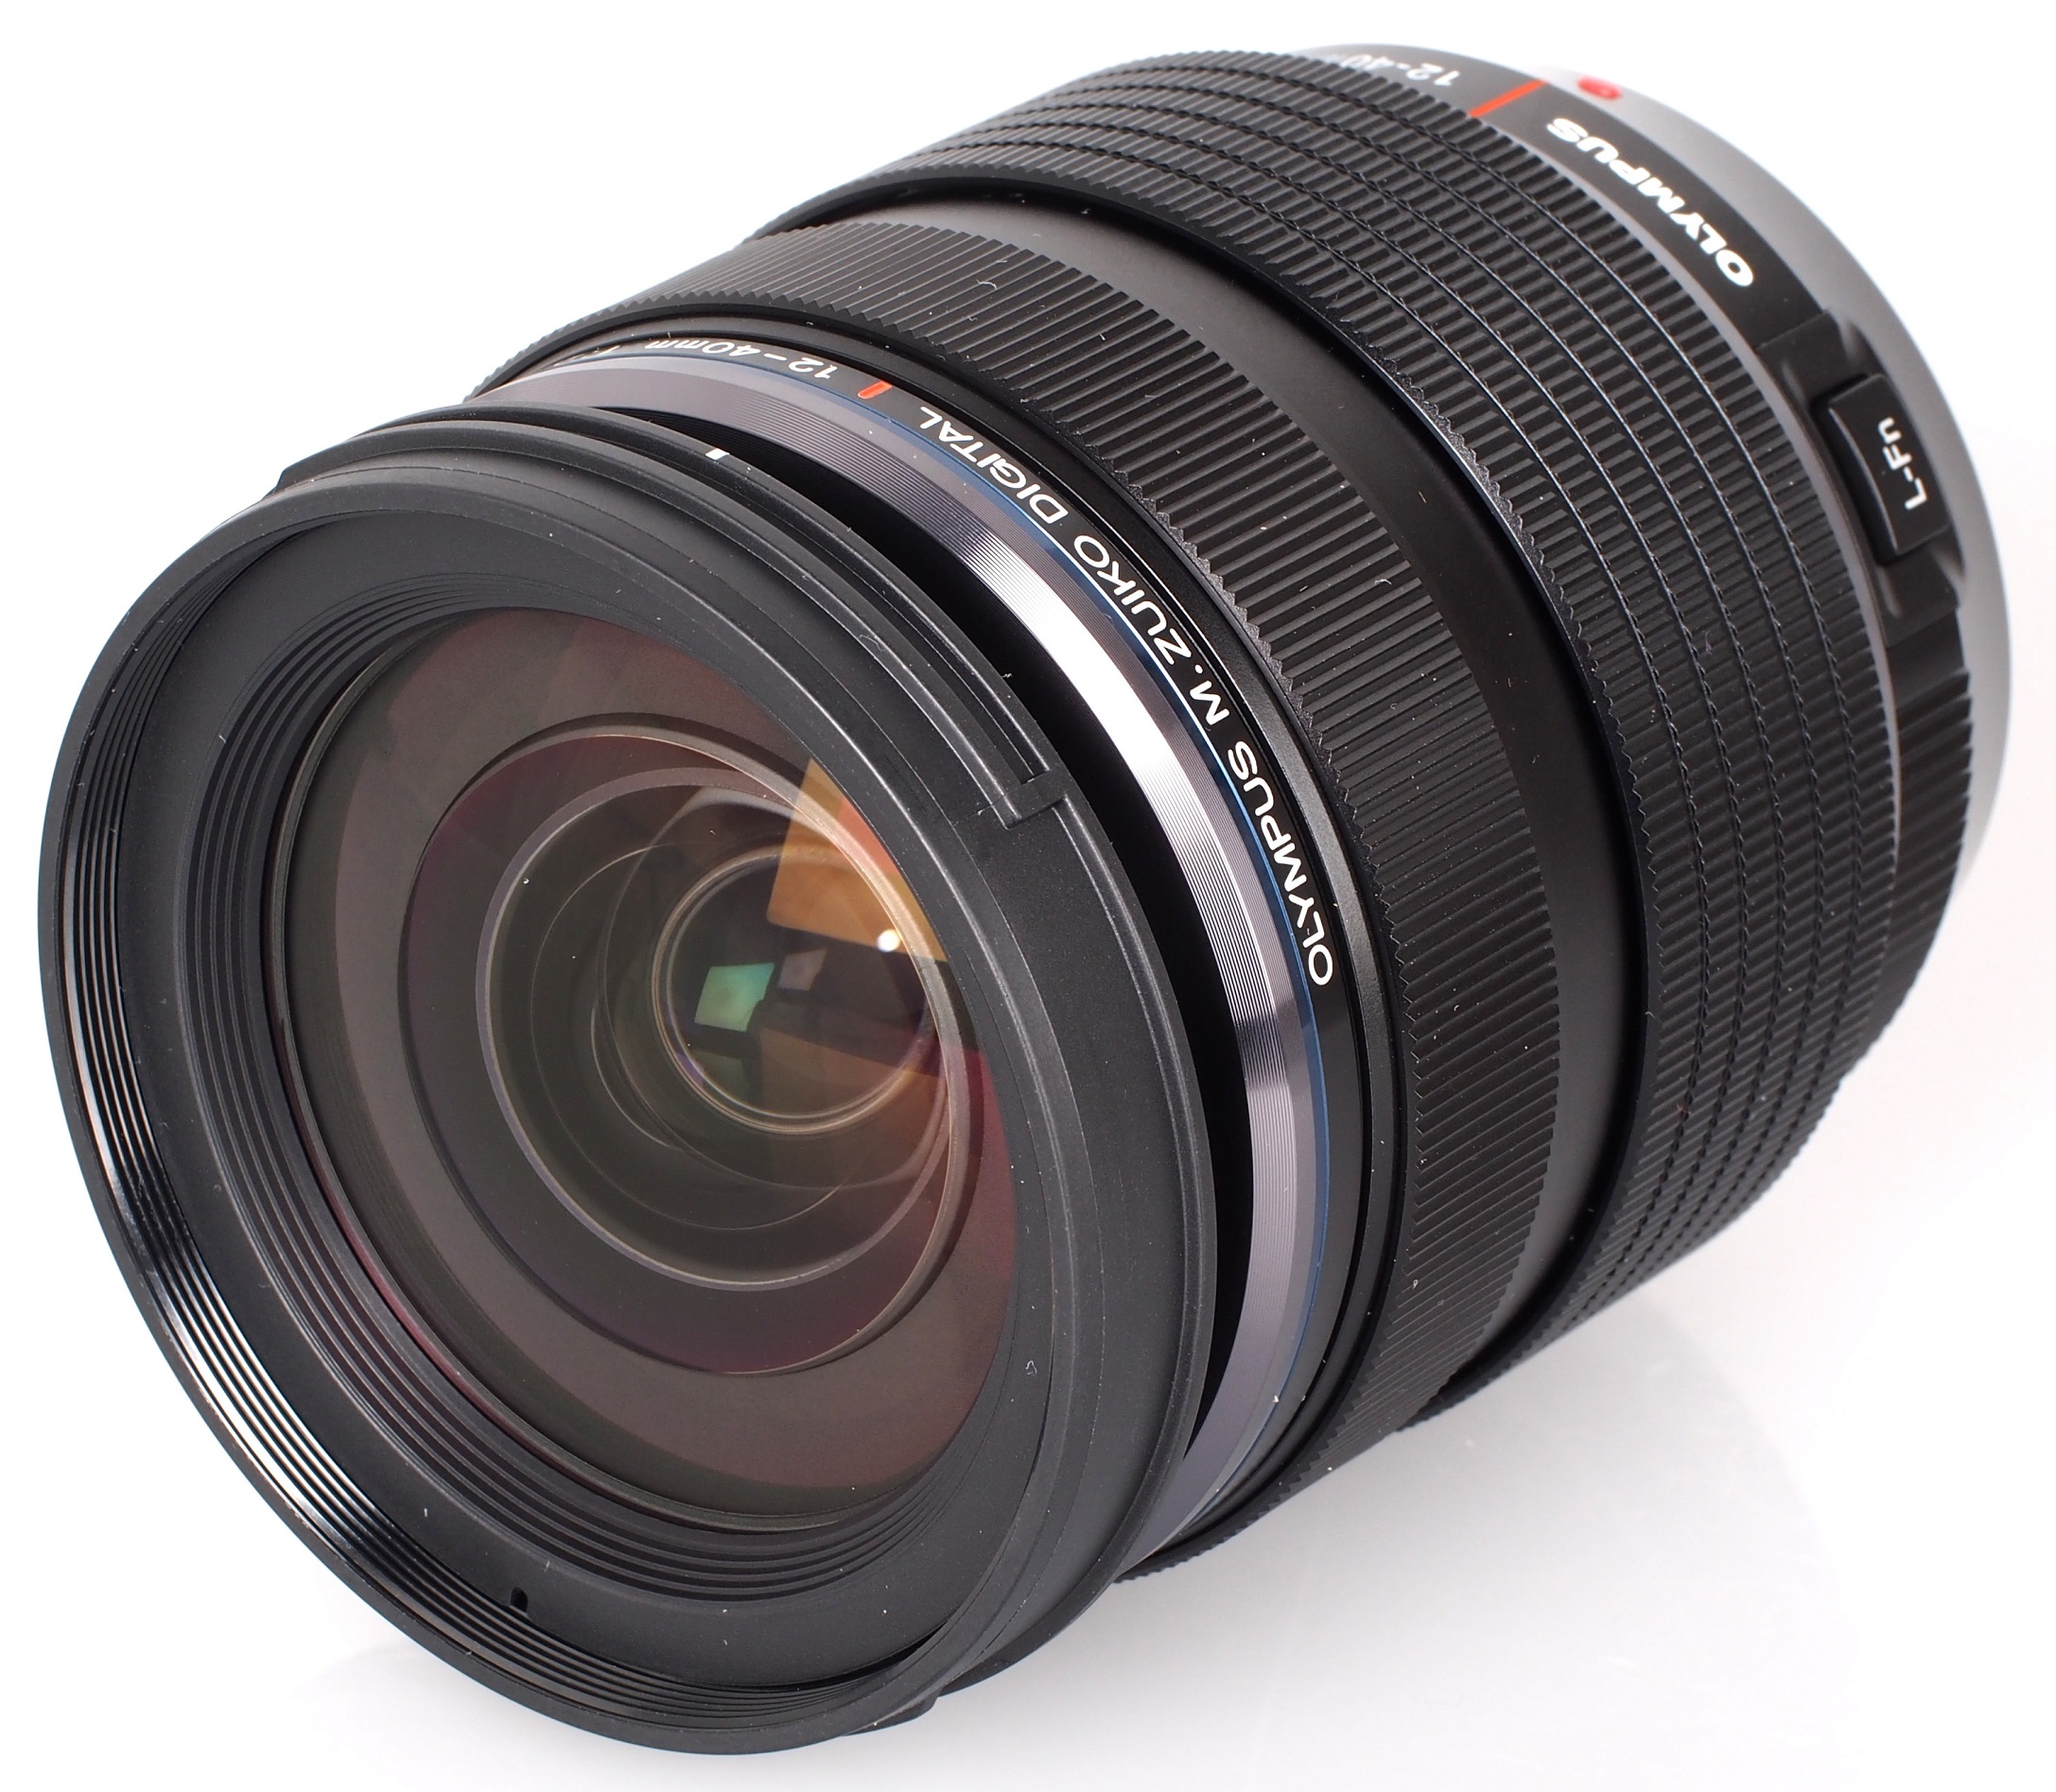 Olympus M.Zuiko ED 12-40mm f/2.8 PRO Lens Review